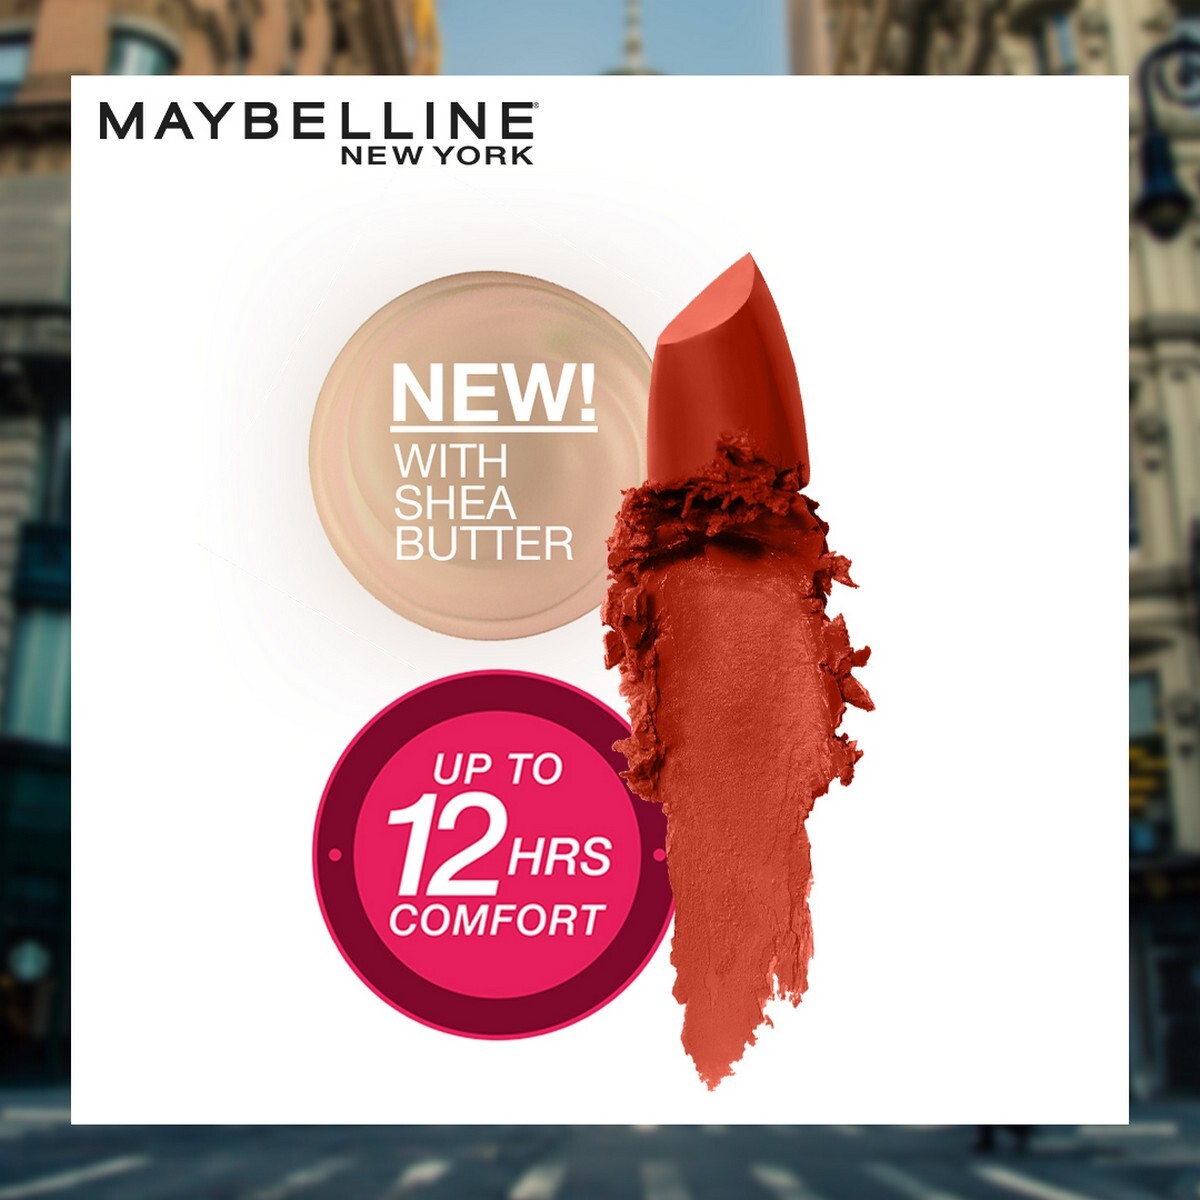 Maybelline New York Color Sensational Creamy Matte Lipstick, 674 Madison Red, 3.9g